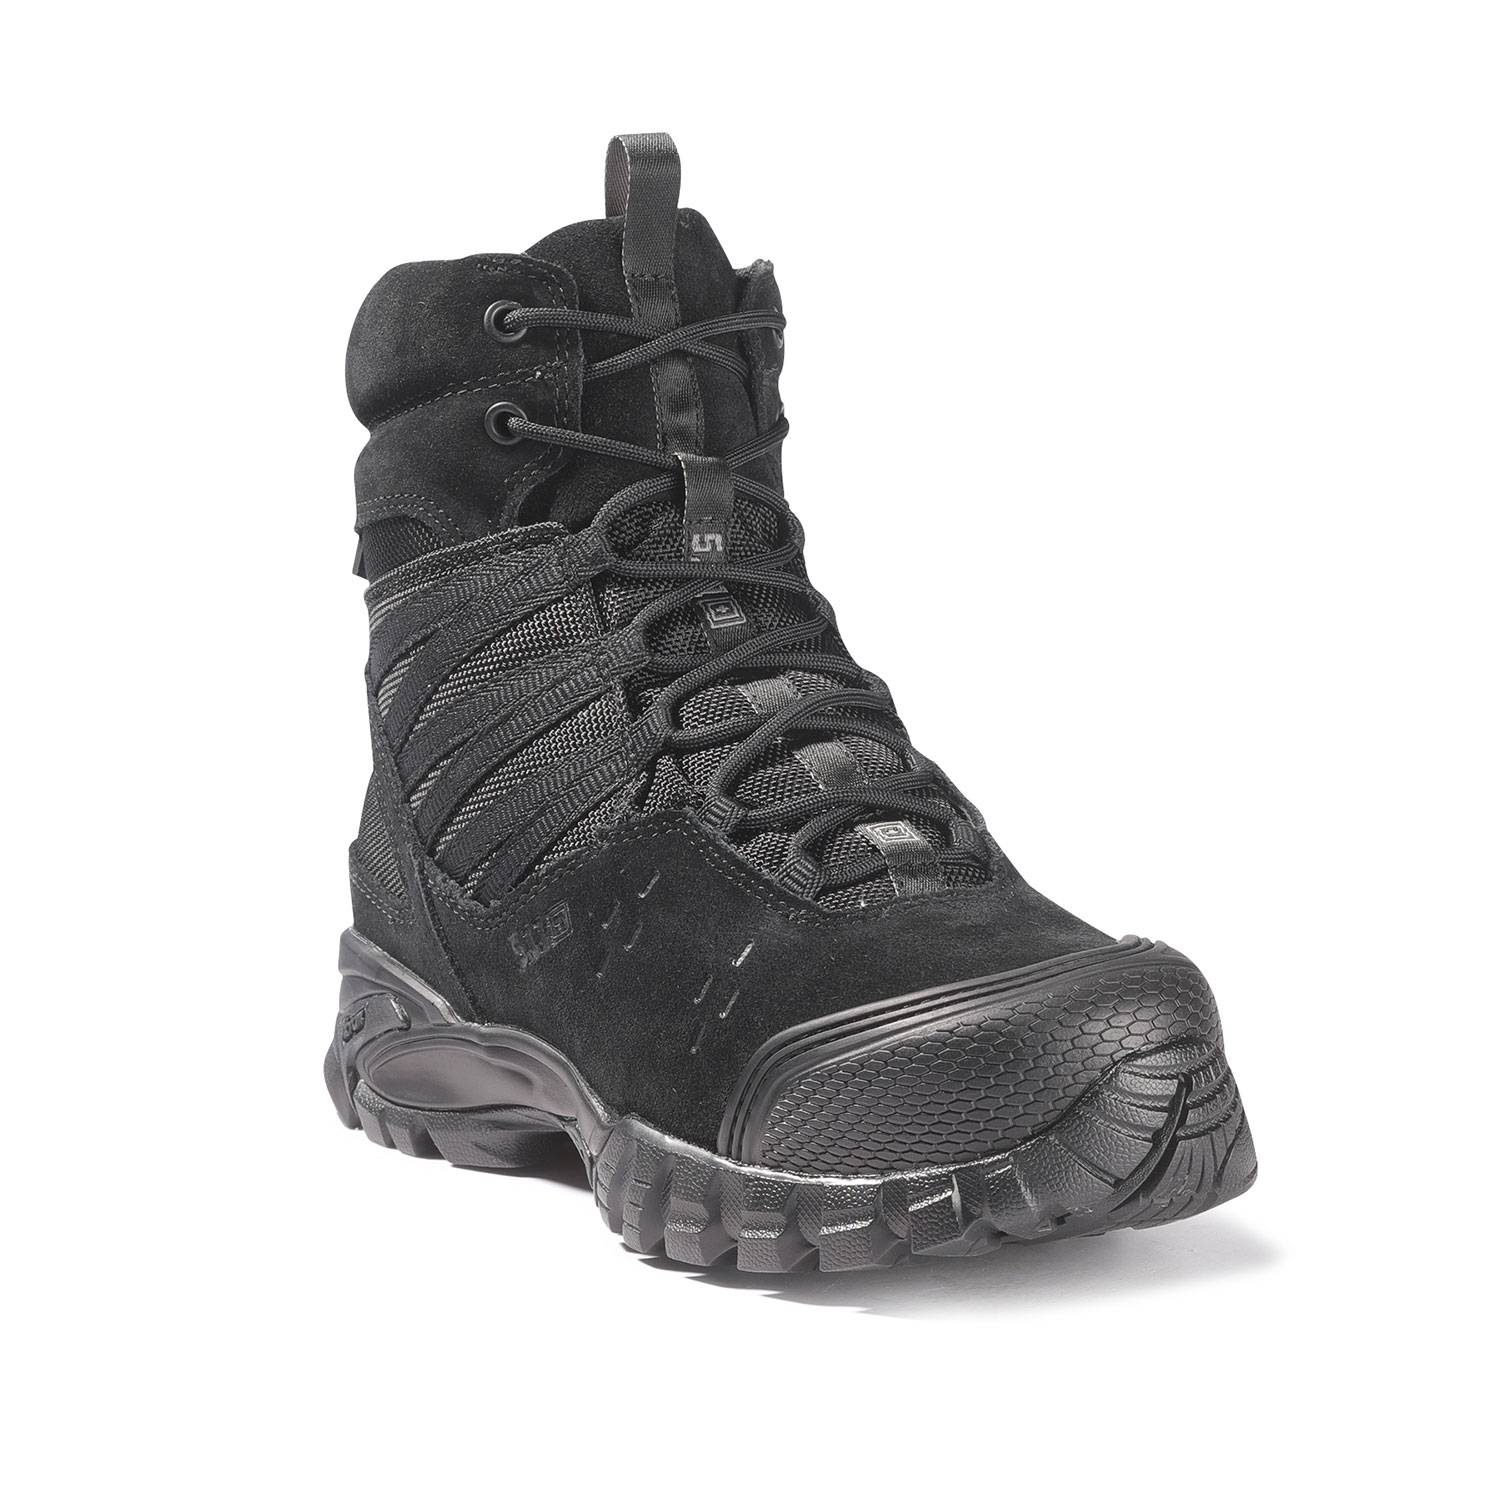 511 tactical boots waterproof